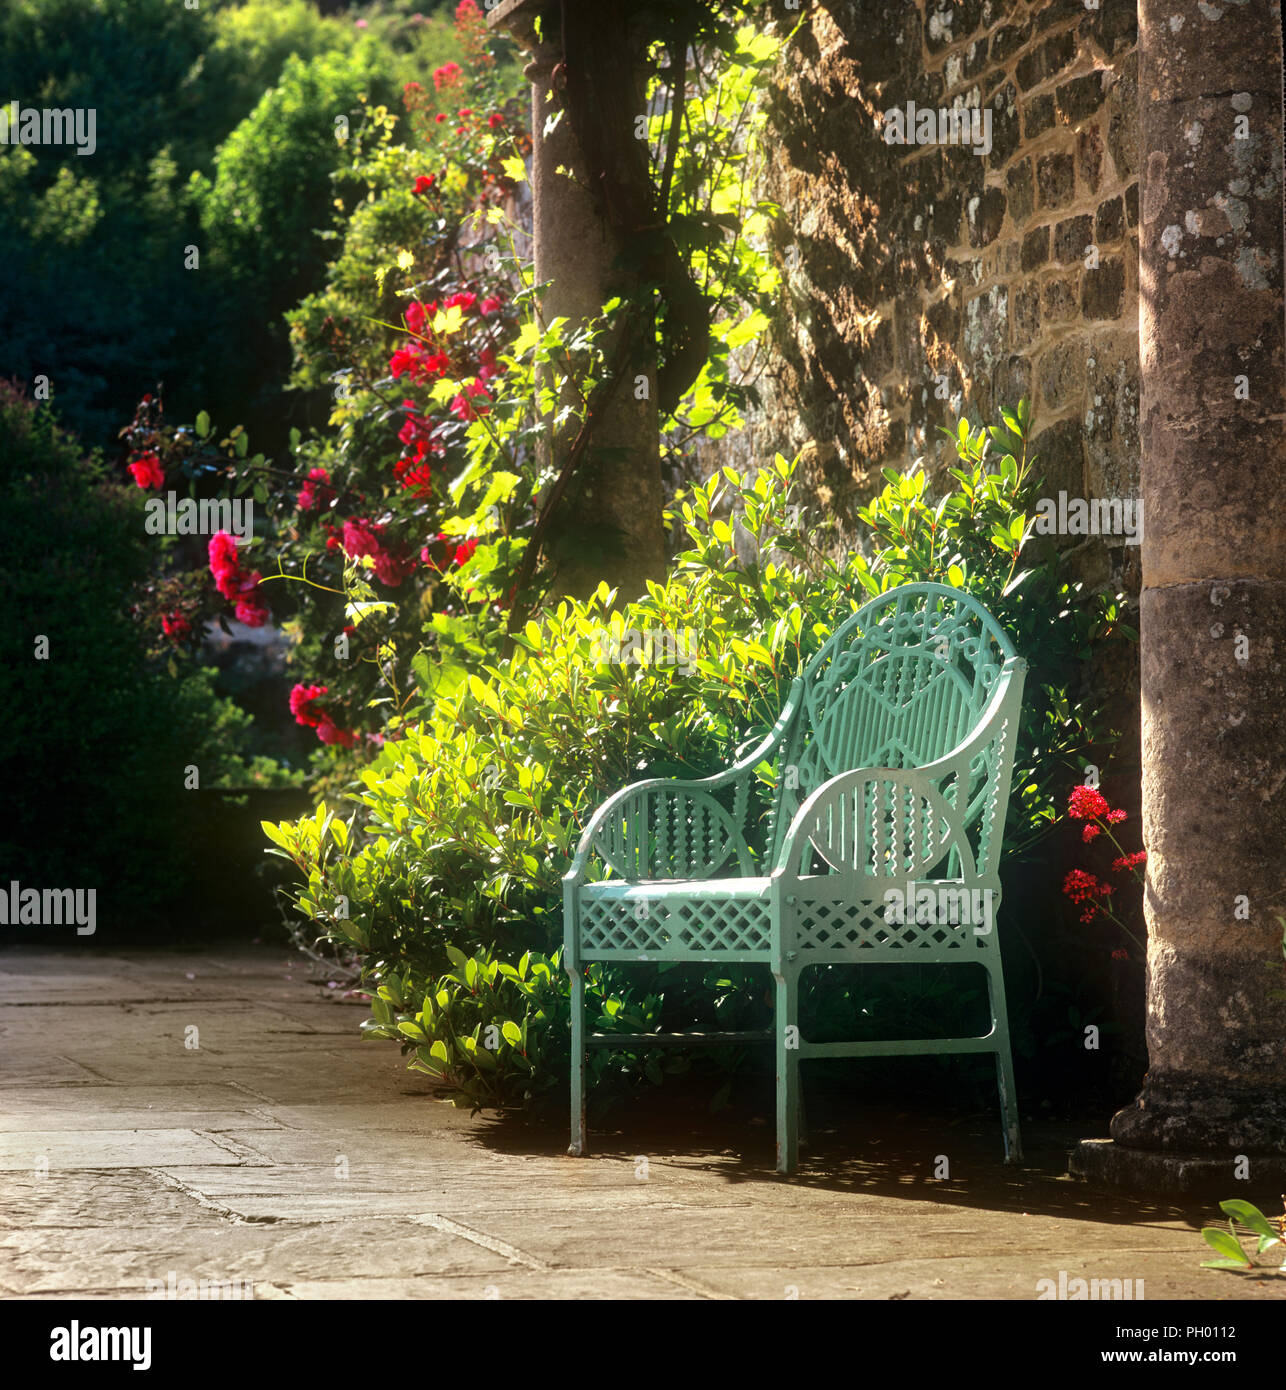 Classic Gitter metall Gartenstuhl, im Sommer Sonnig English Home formale  Land Garten unter schattigen Stein Pergola Stockfotografie - Alamy